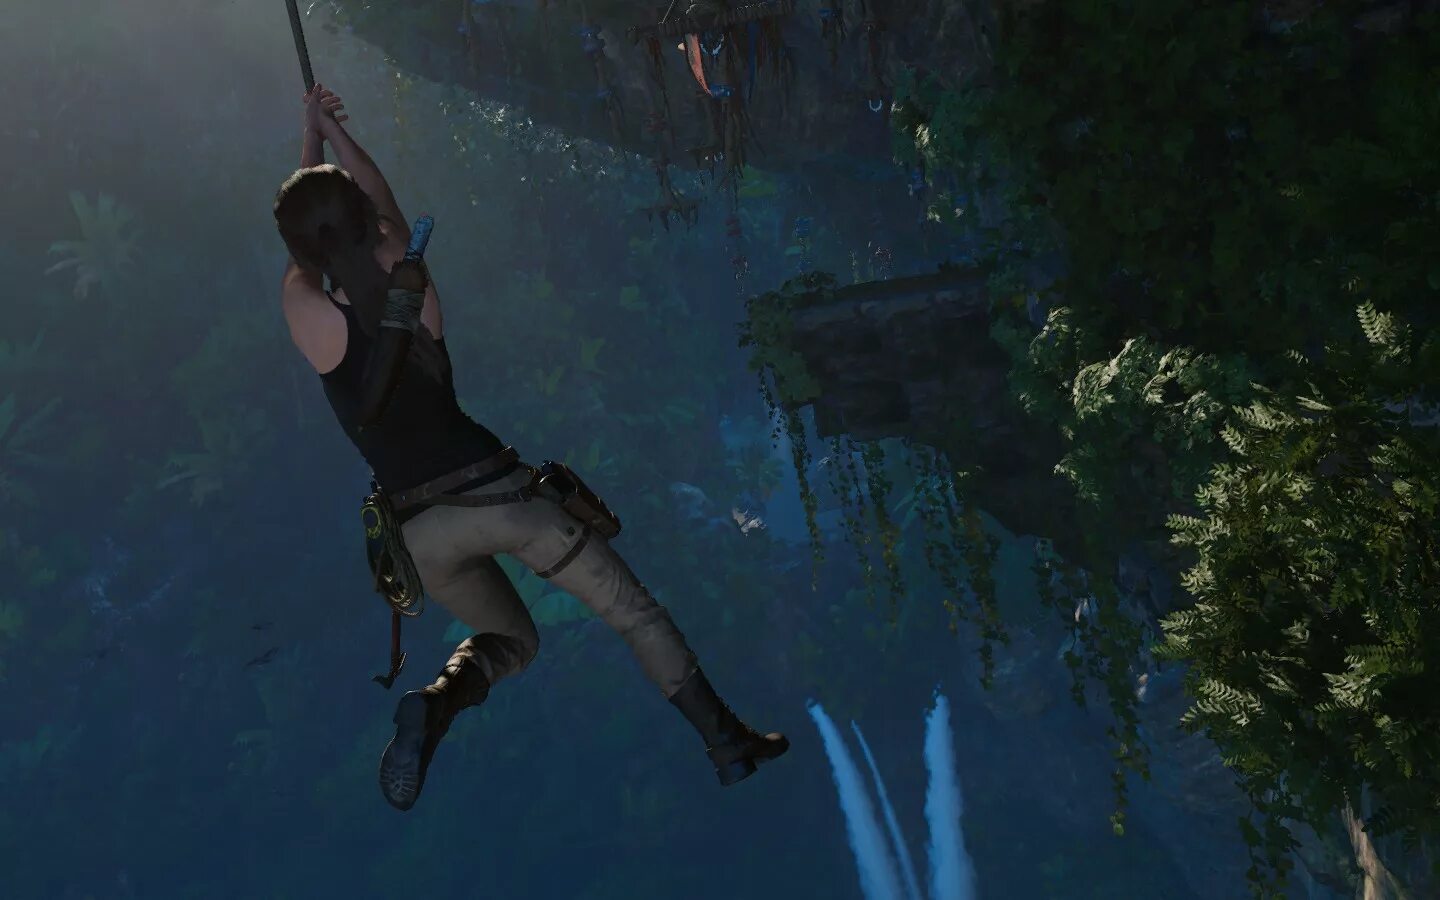 Lara croft island. Русло реки томб Райдер. Shadow of the Tomb Raider русло реки. Shadow of the Tomb Raider русло реки карта.